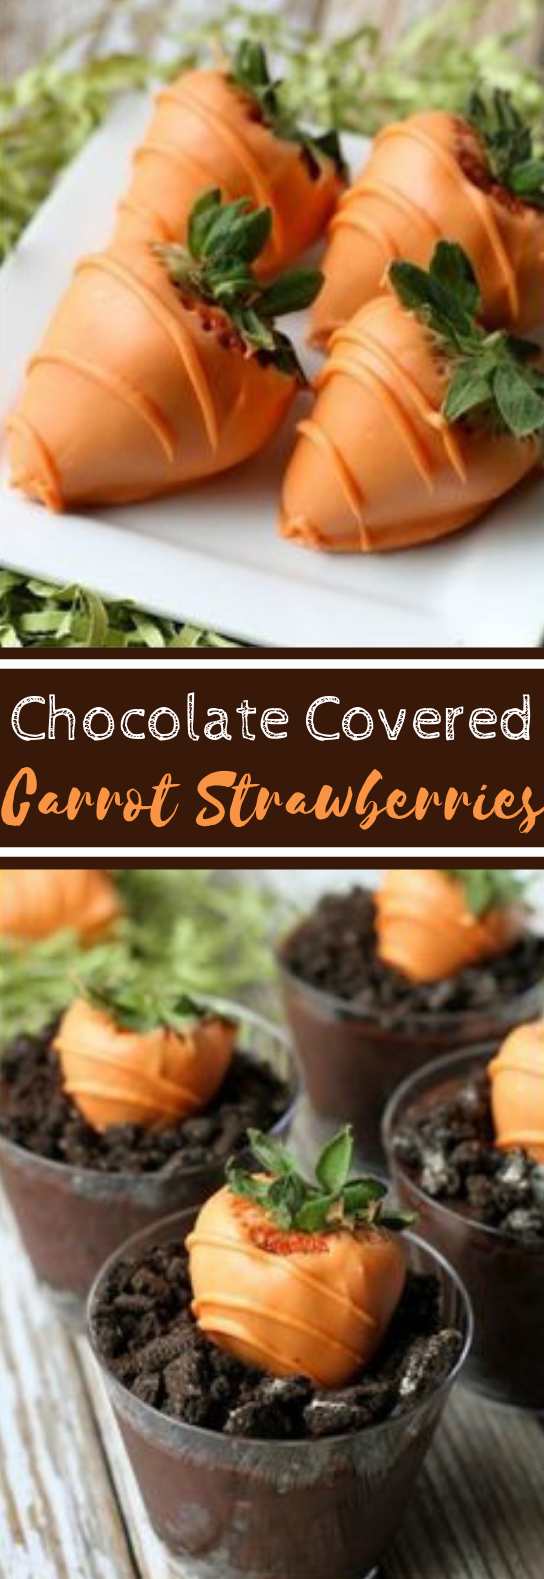 Carrot Chocolate Covered Strawberries #dessert #chocolate